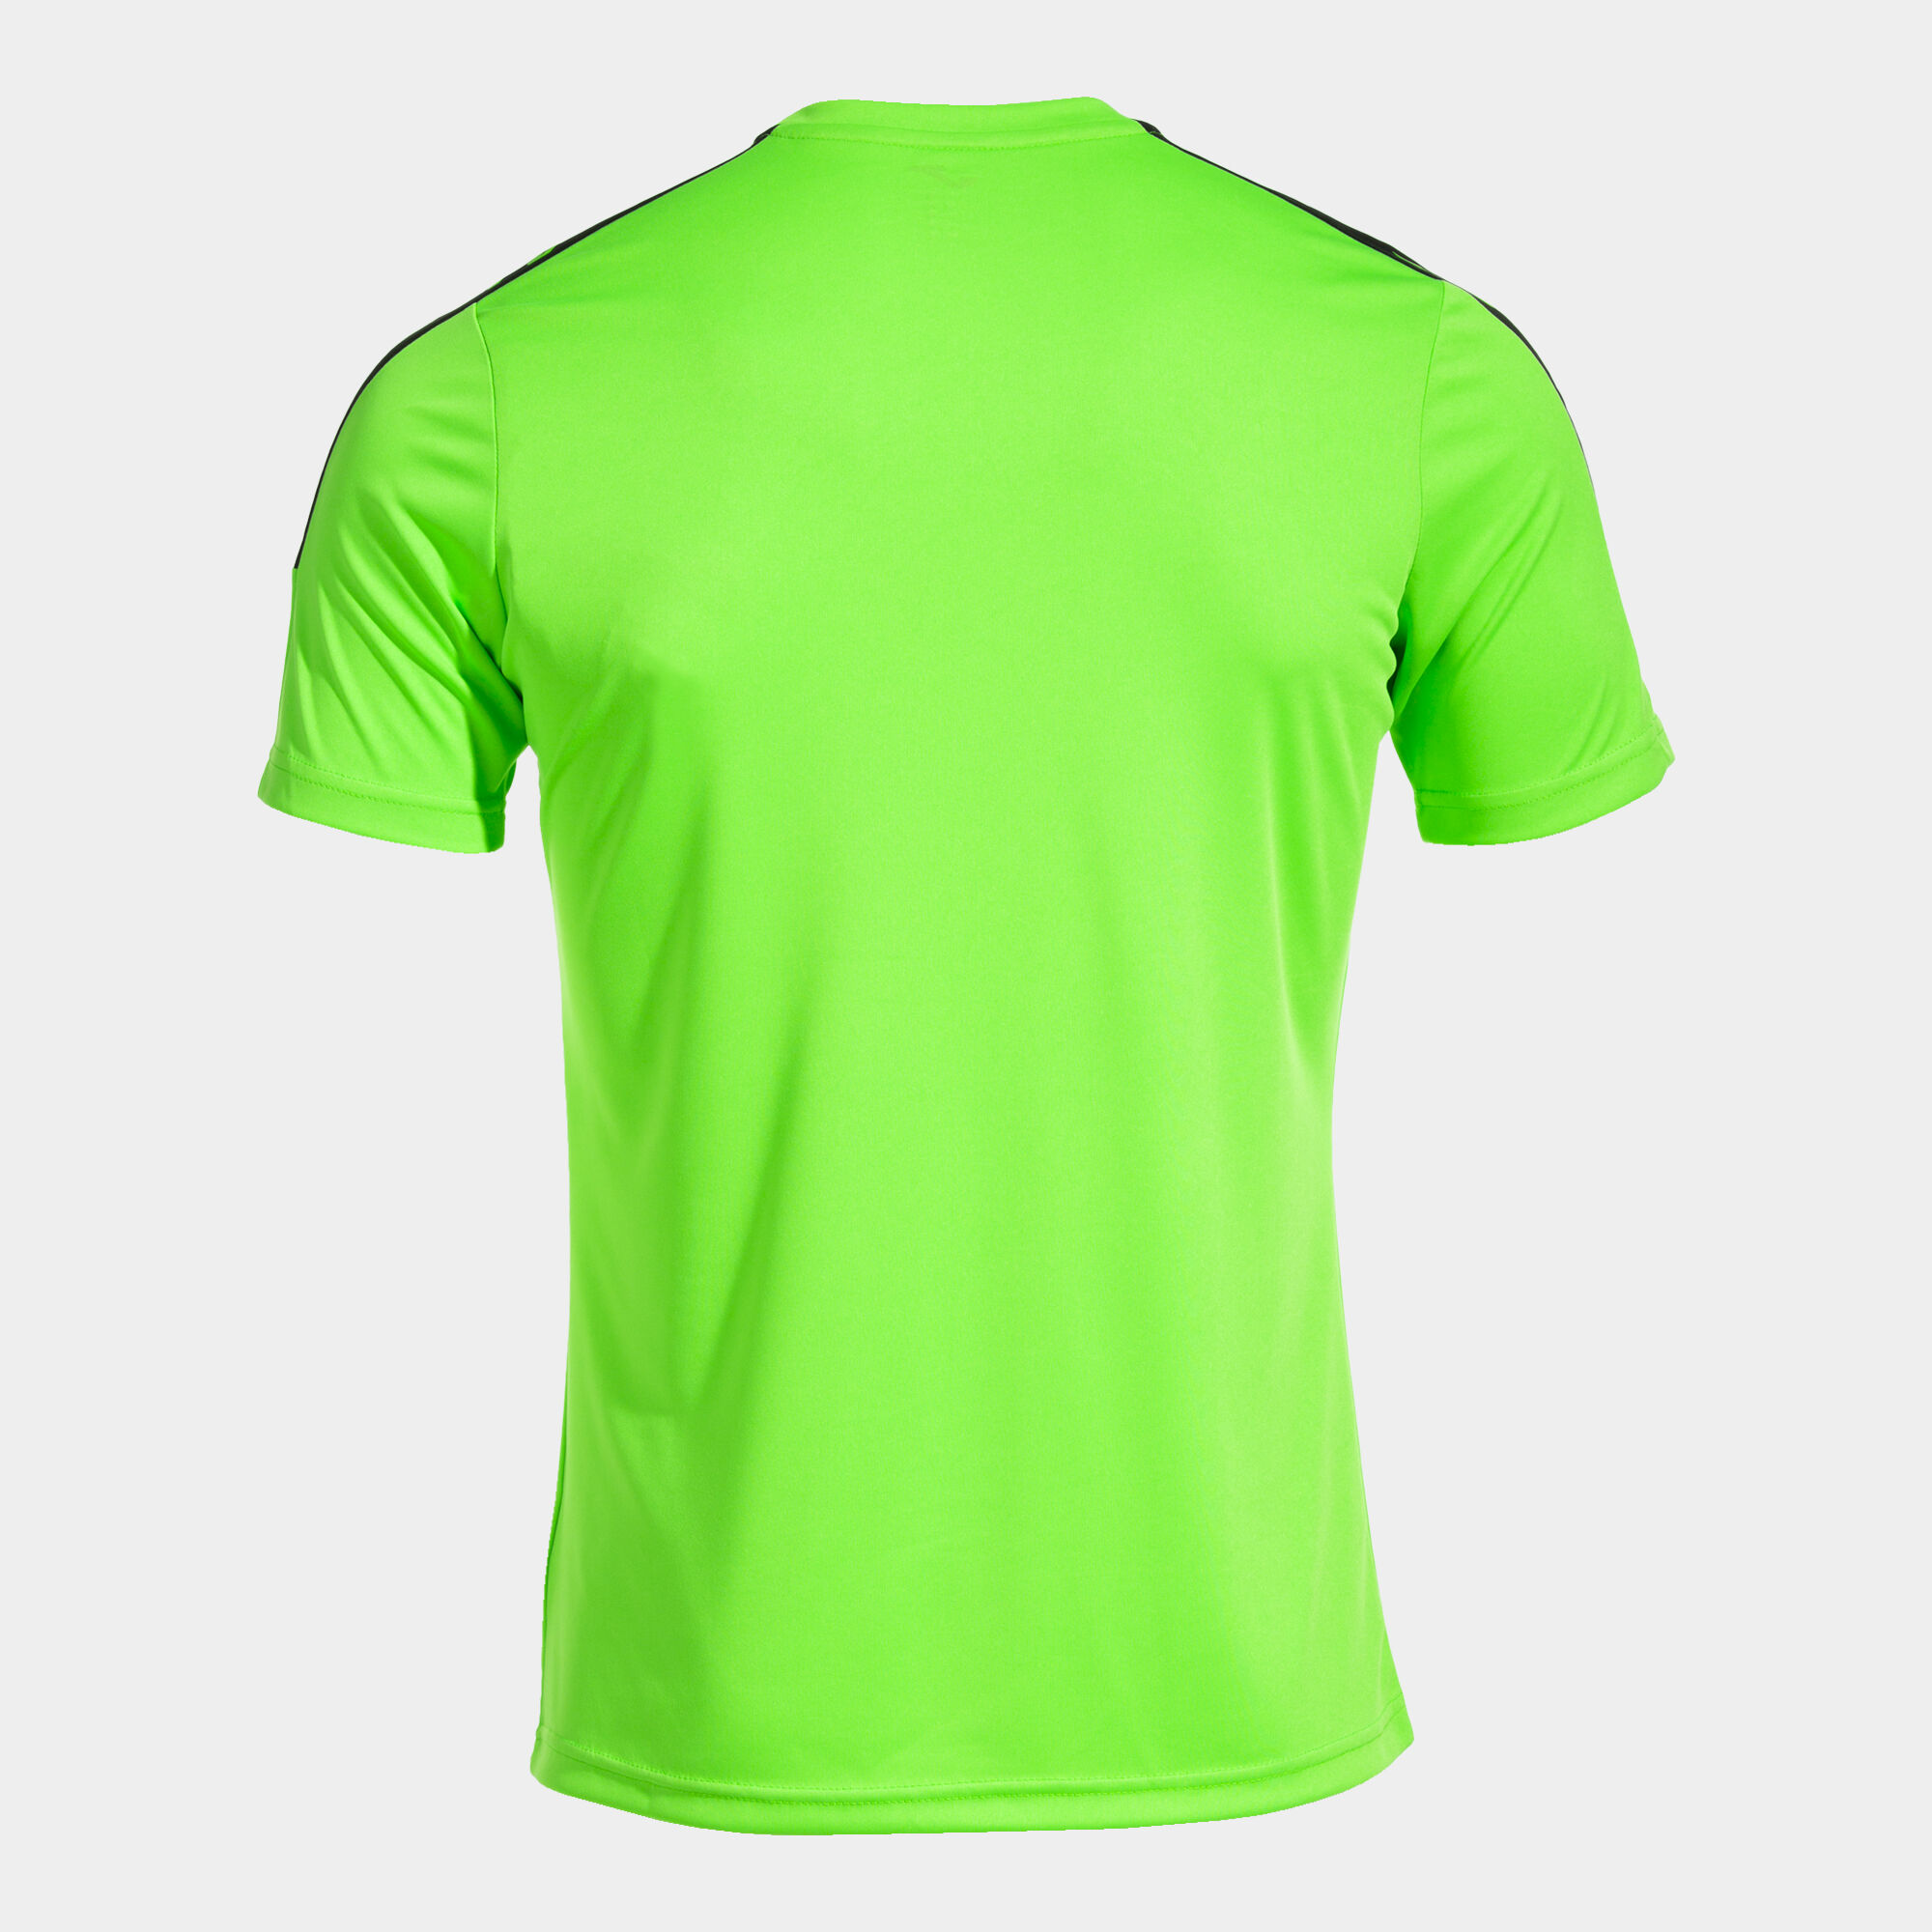 Camiseta manga corta hombre Olimpiada verde flúor negro